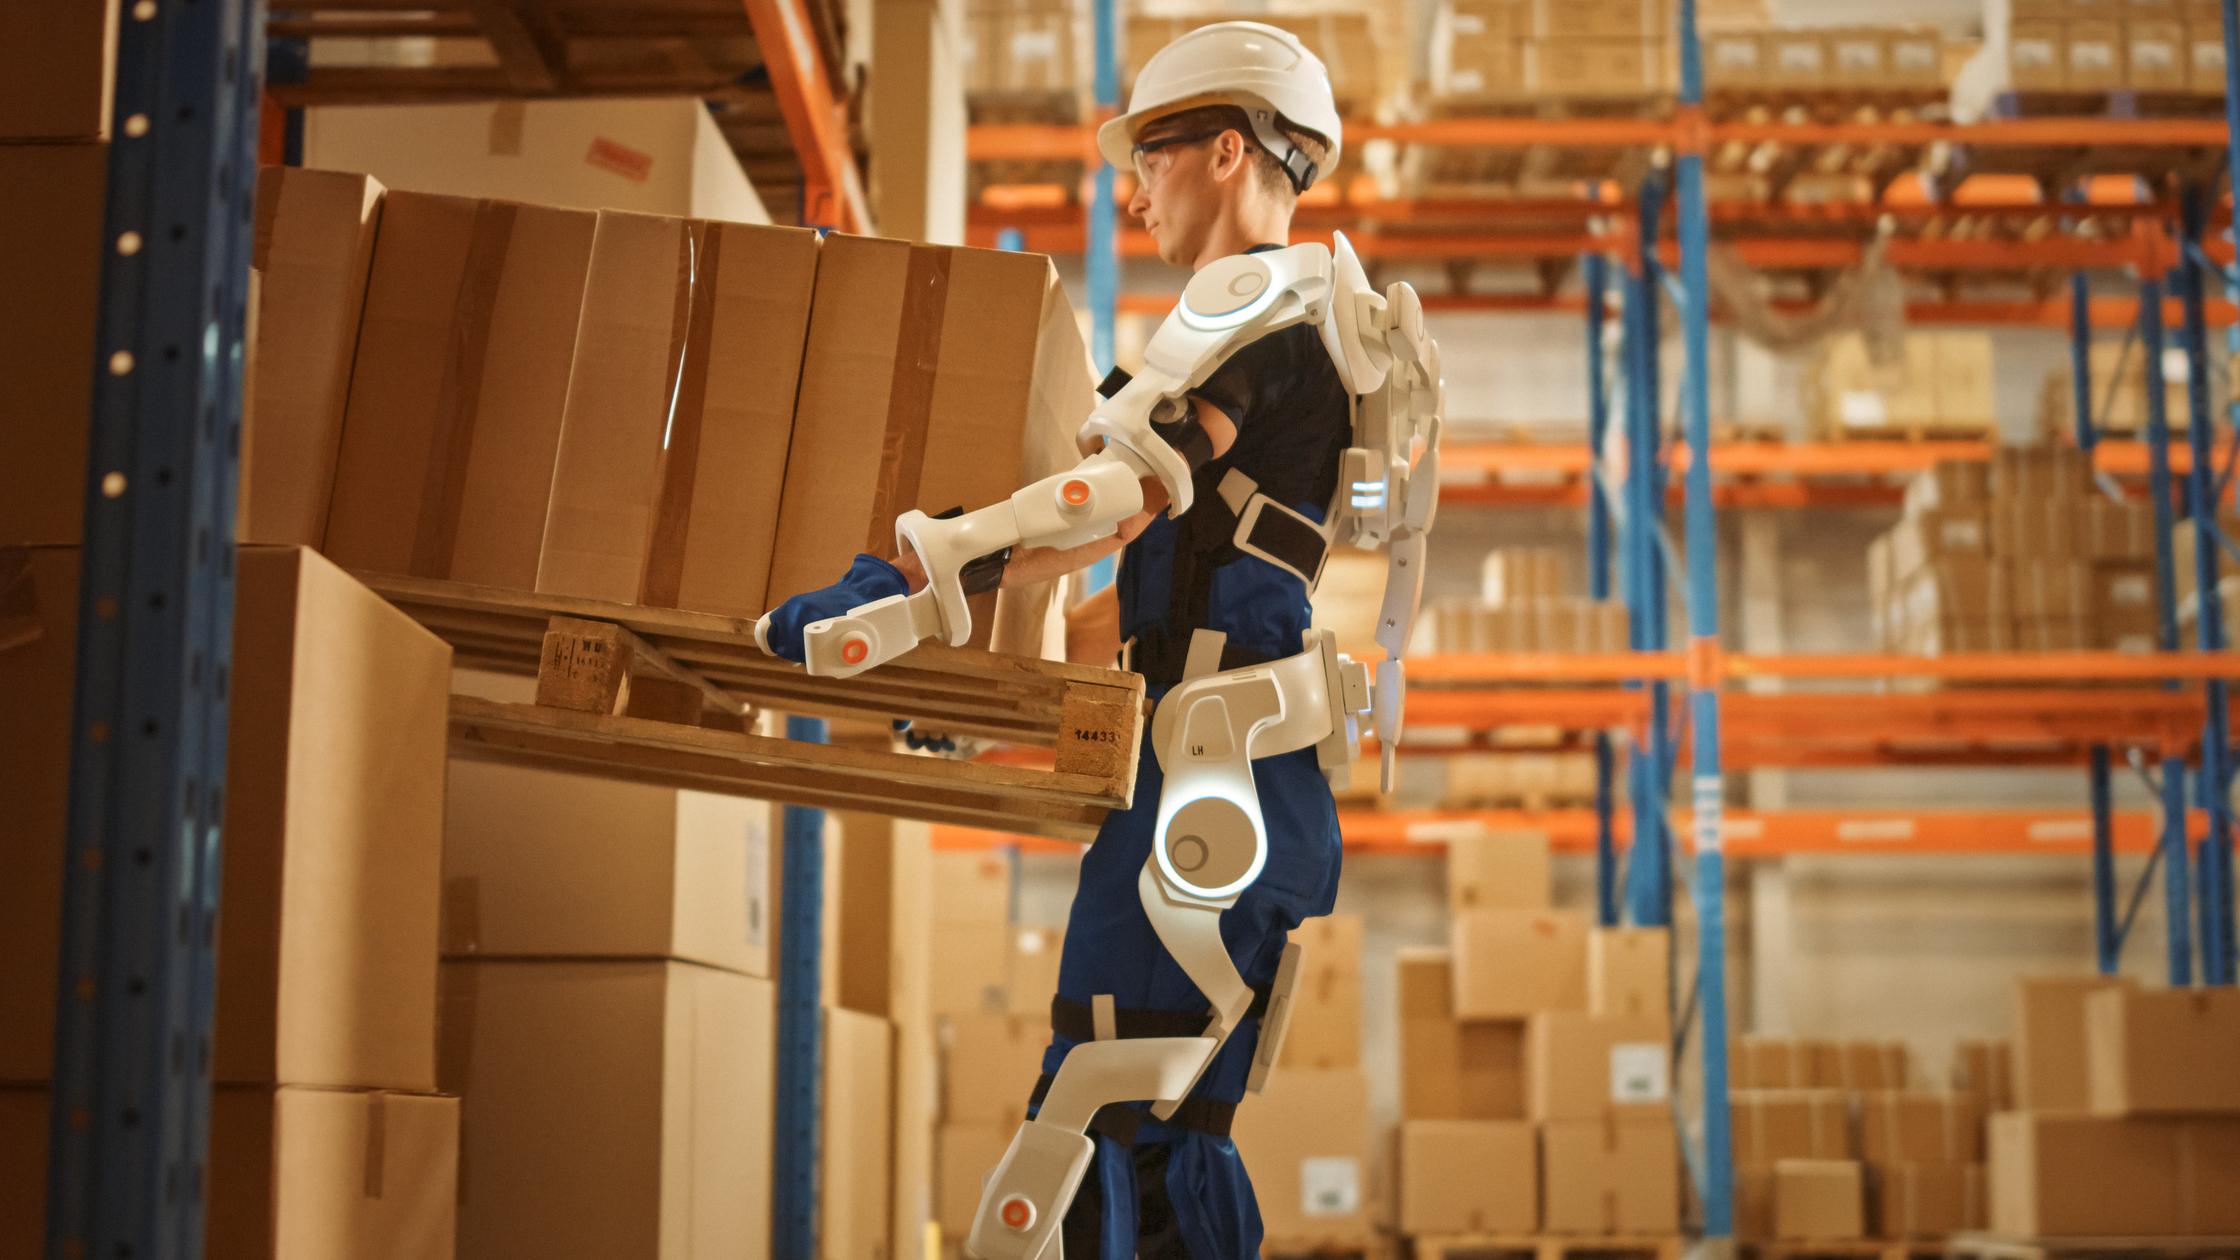 Worker wearing advanced full body powered exoskeleton, lifts heavy pallet full of cardboard boxes